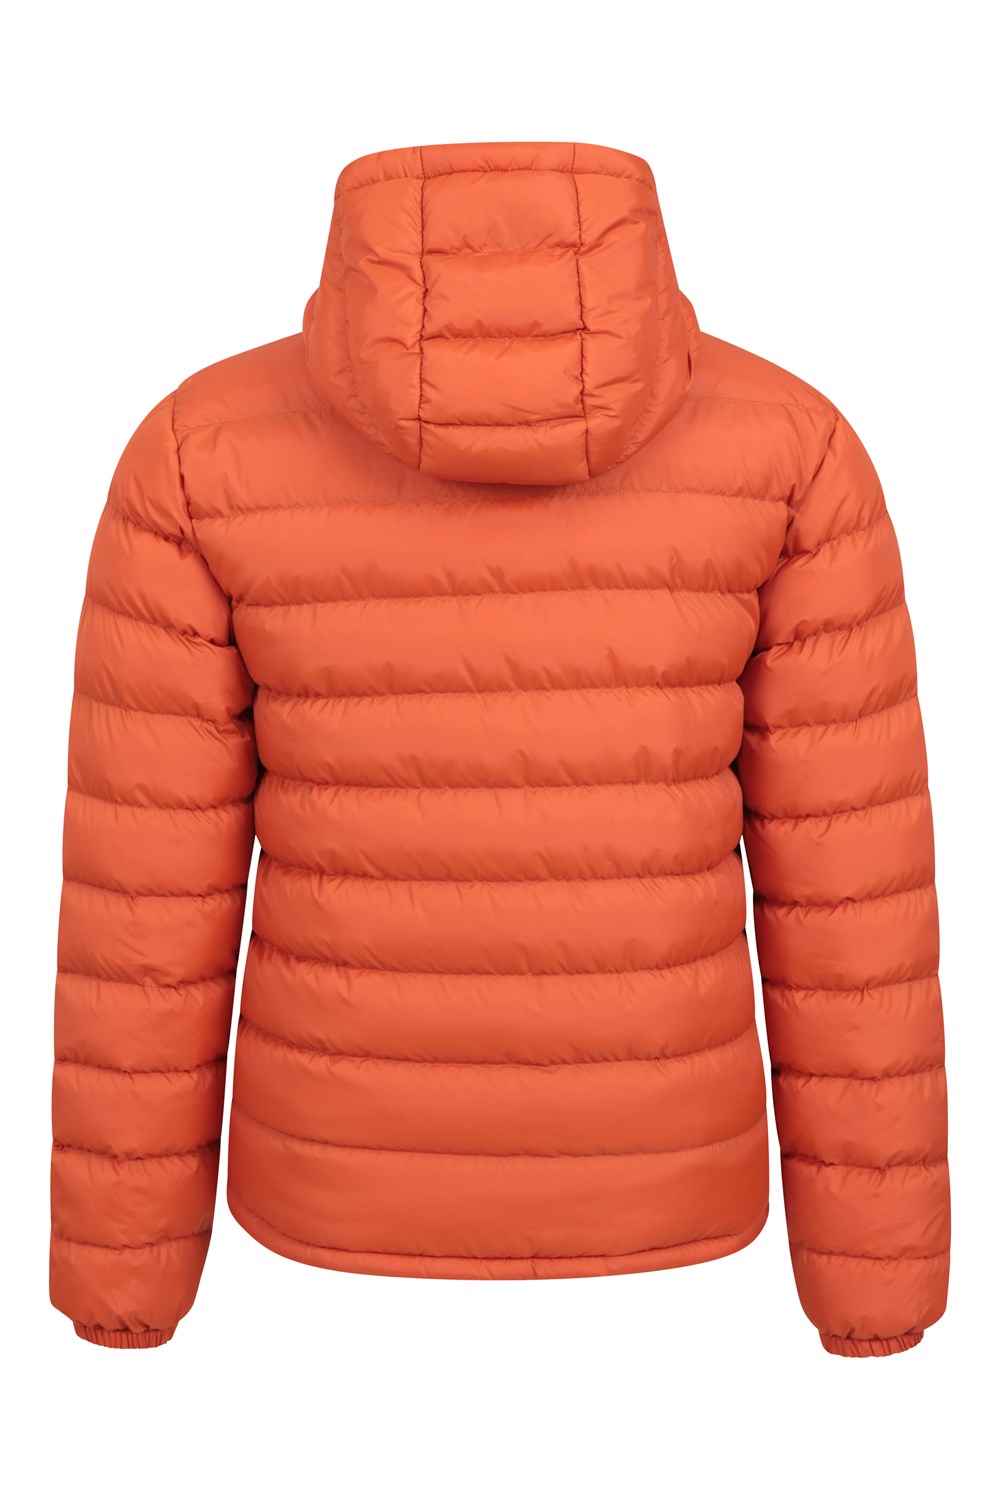 miniature 76 - Mountain Warehouse Mens Seasons Padded Jacket Puffer Water Resistant Winter Coat